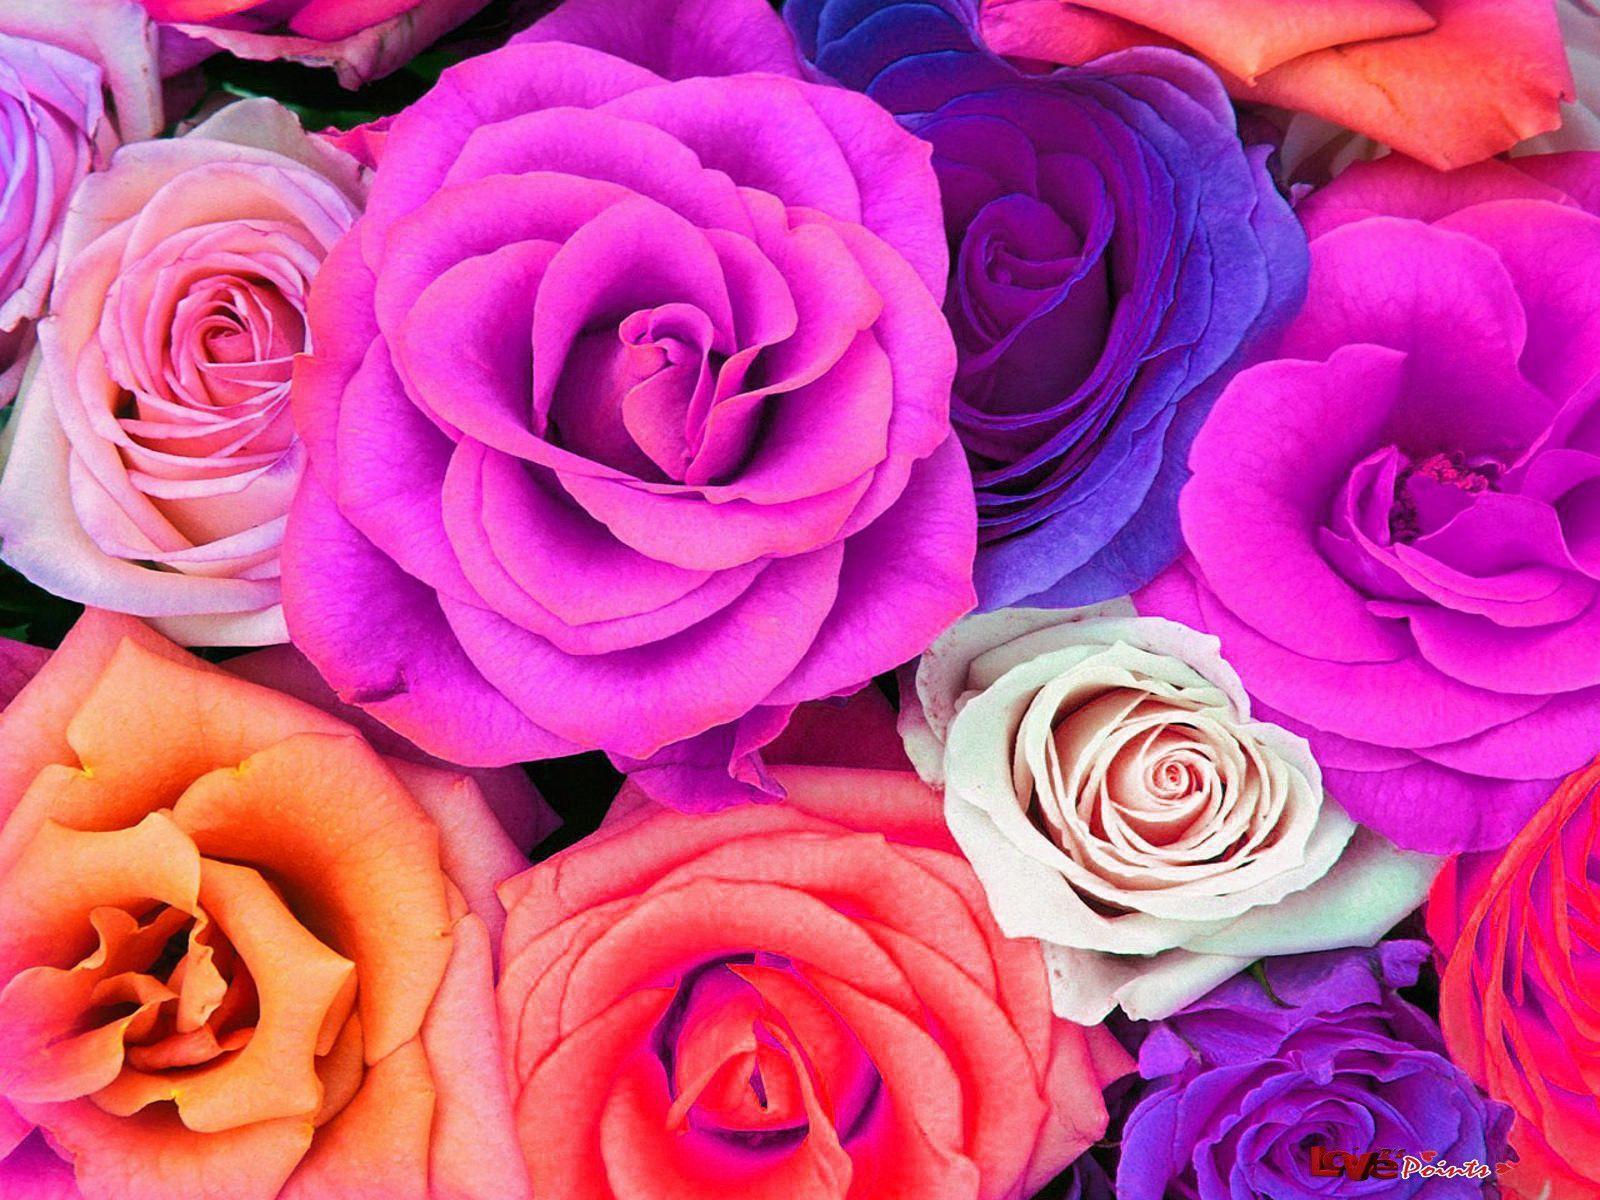 Colorful Flower Wallpaper